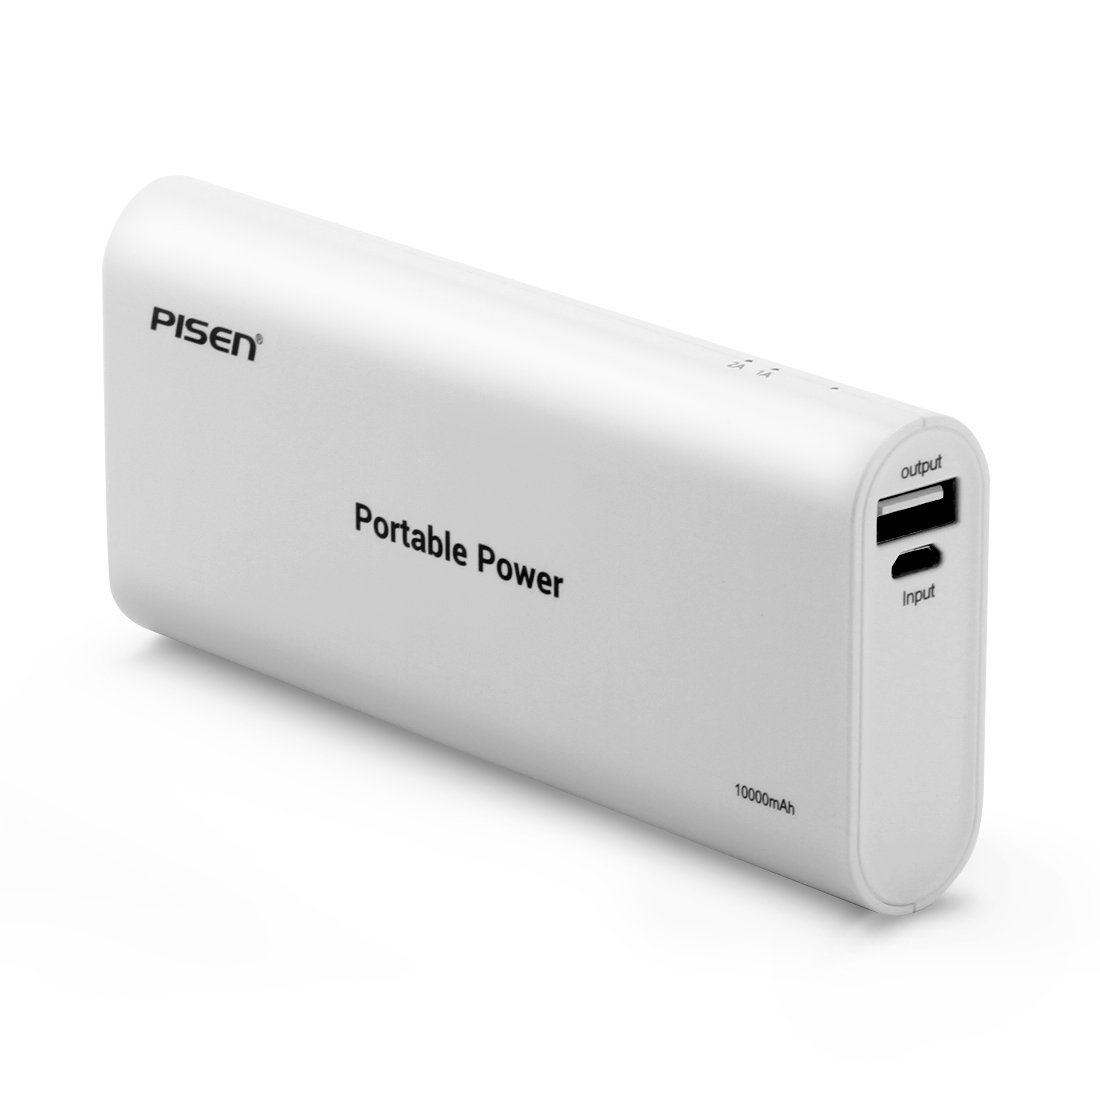 Pisen TS-D182 Portable Power 10000 mAh USB Mobile Power Bank